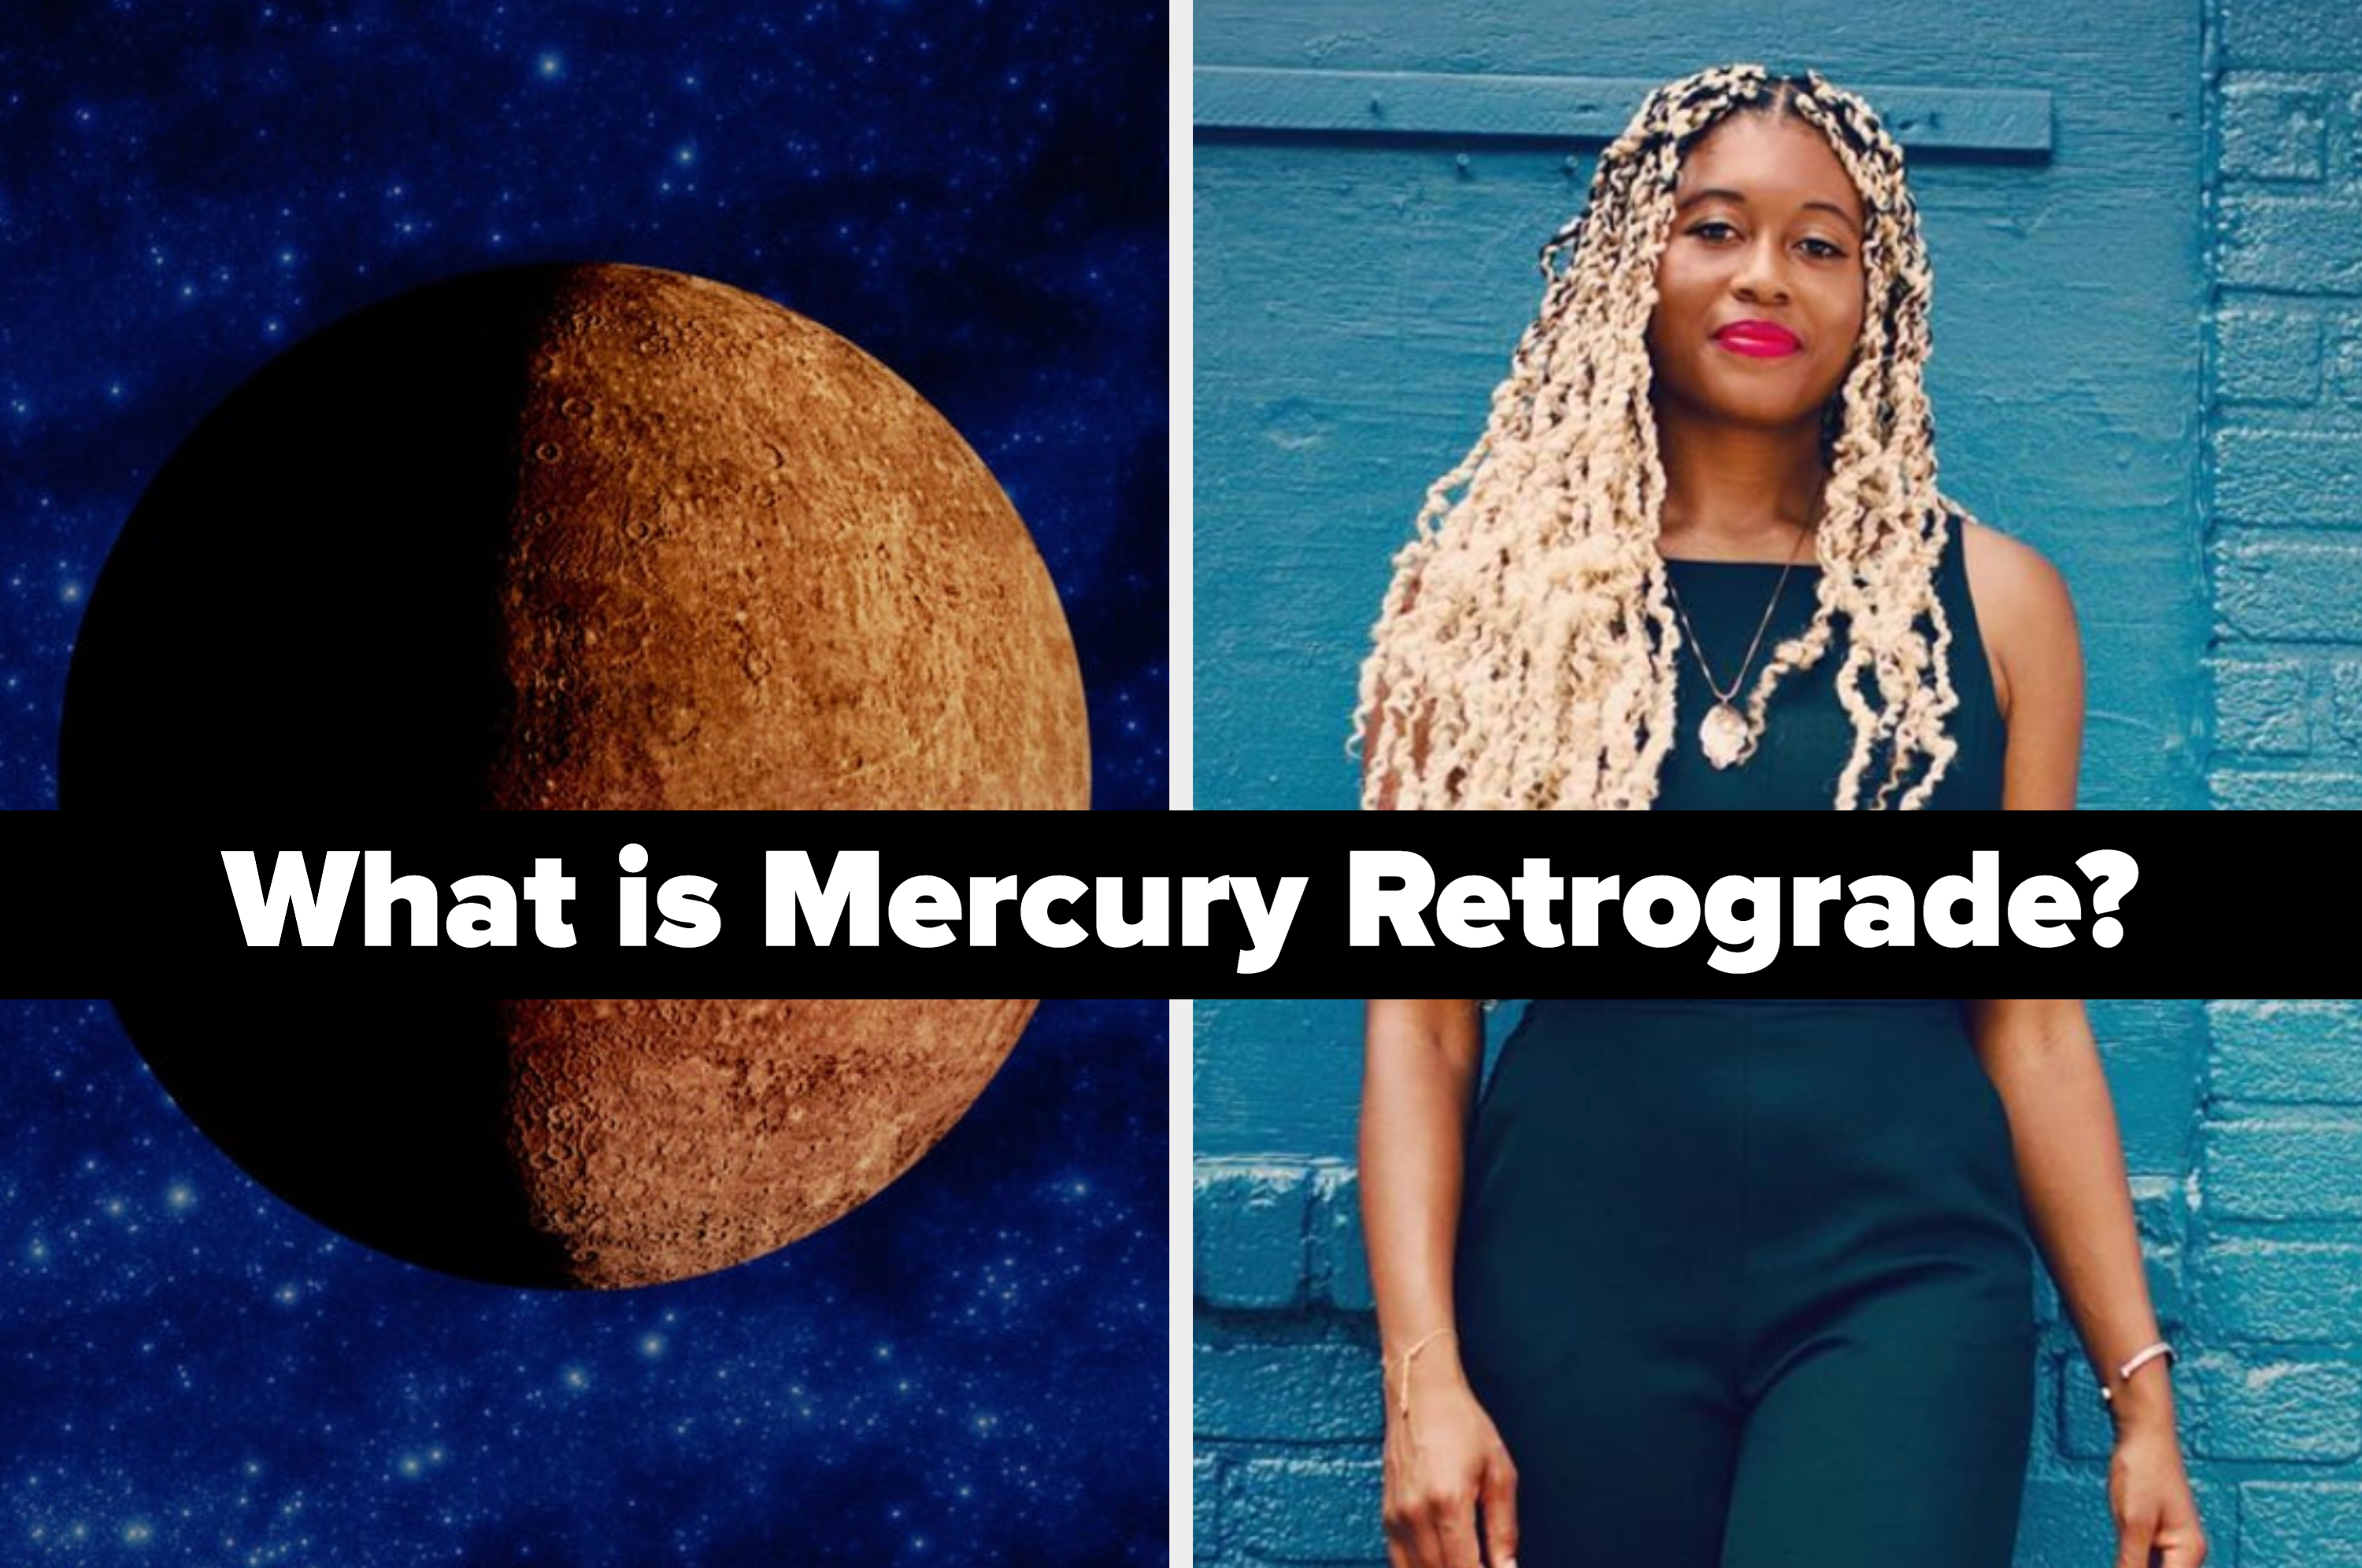 mercury retrograde 2020 meme